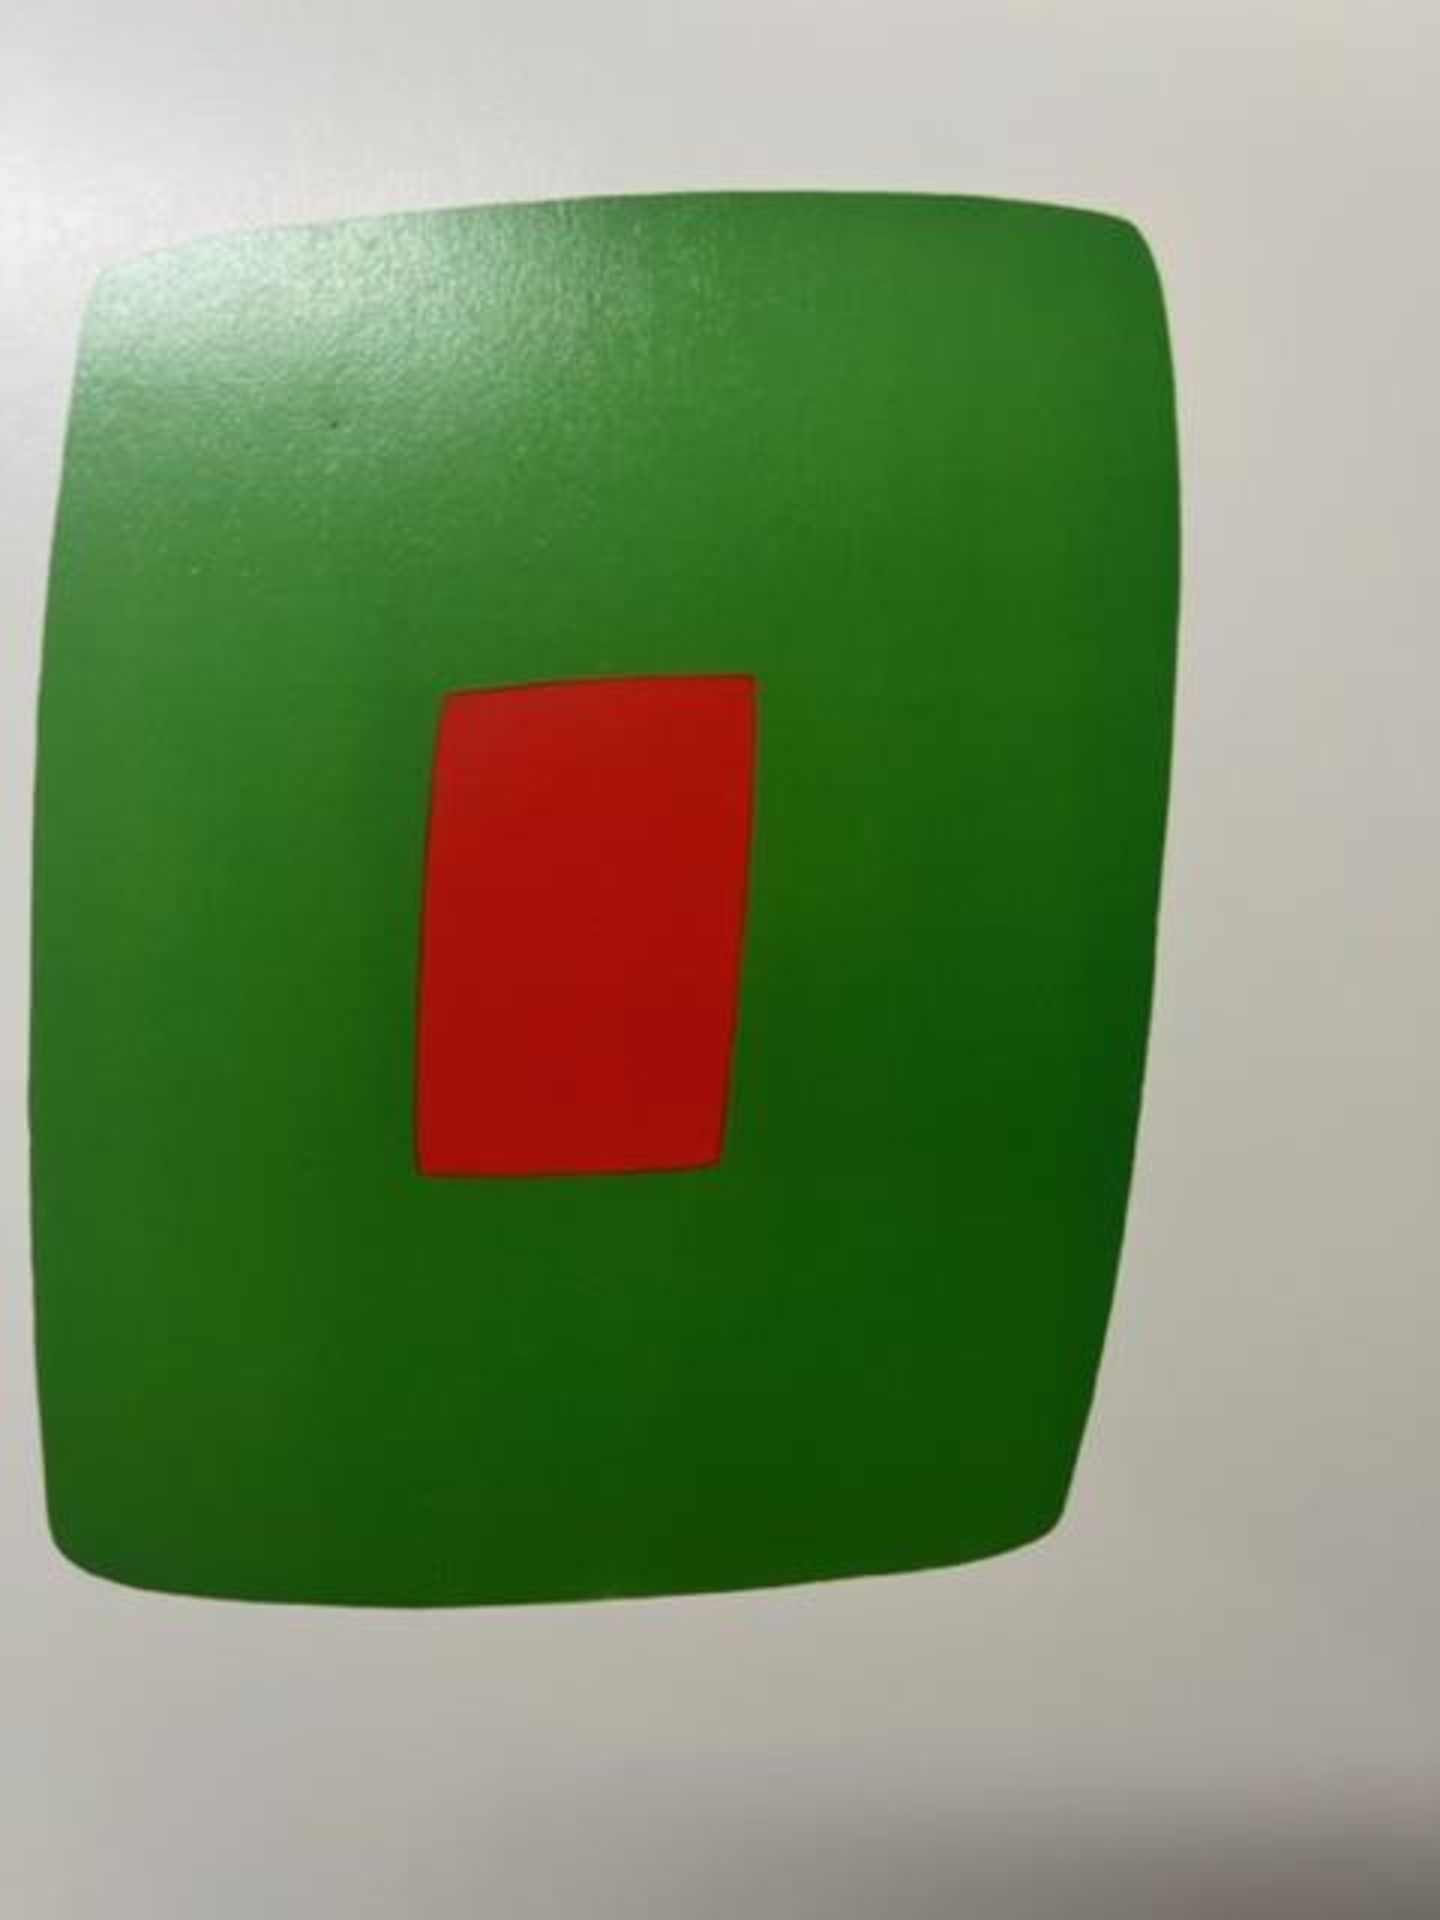 Ellsworth Kelly "Green with Red" Print. - Bild 5 aus 6